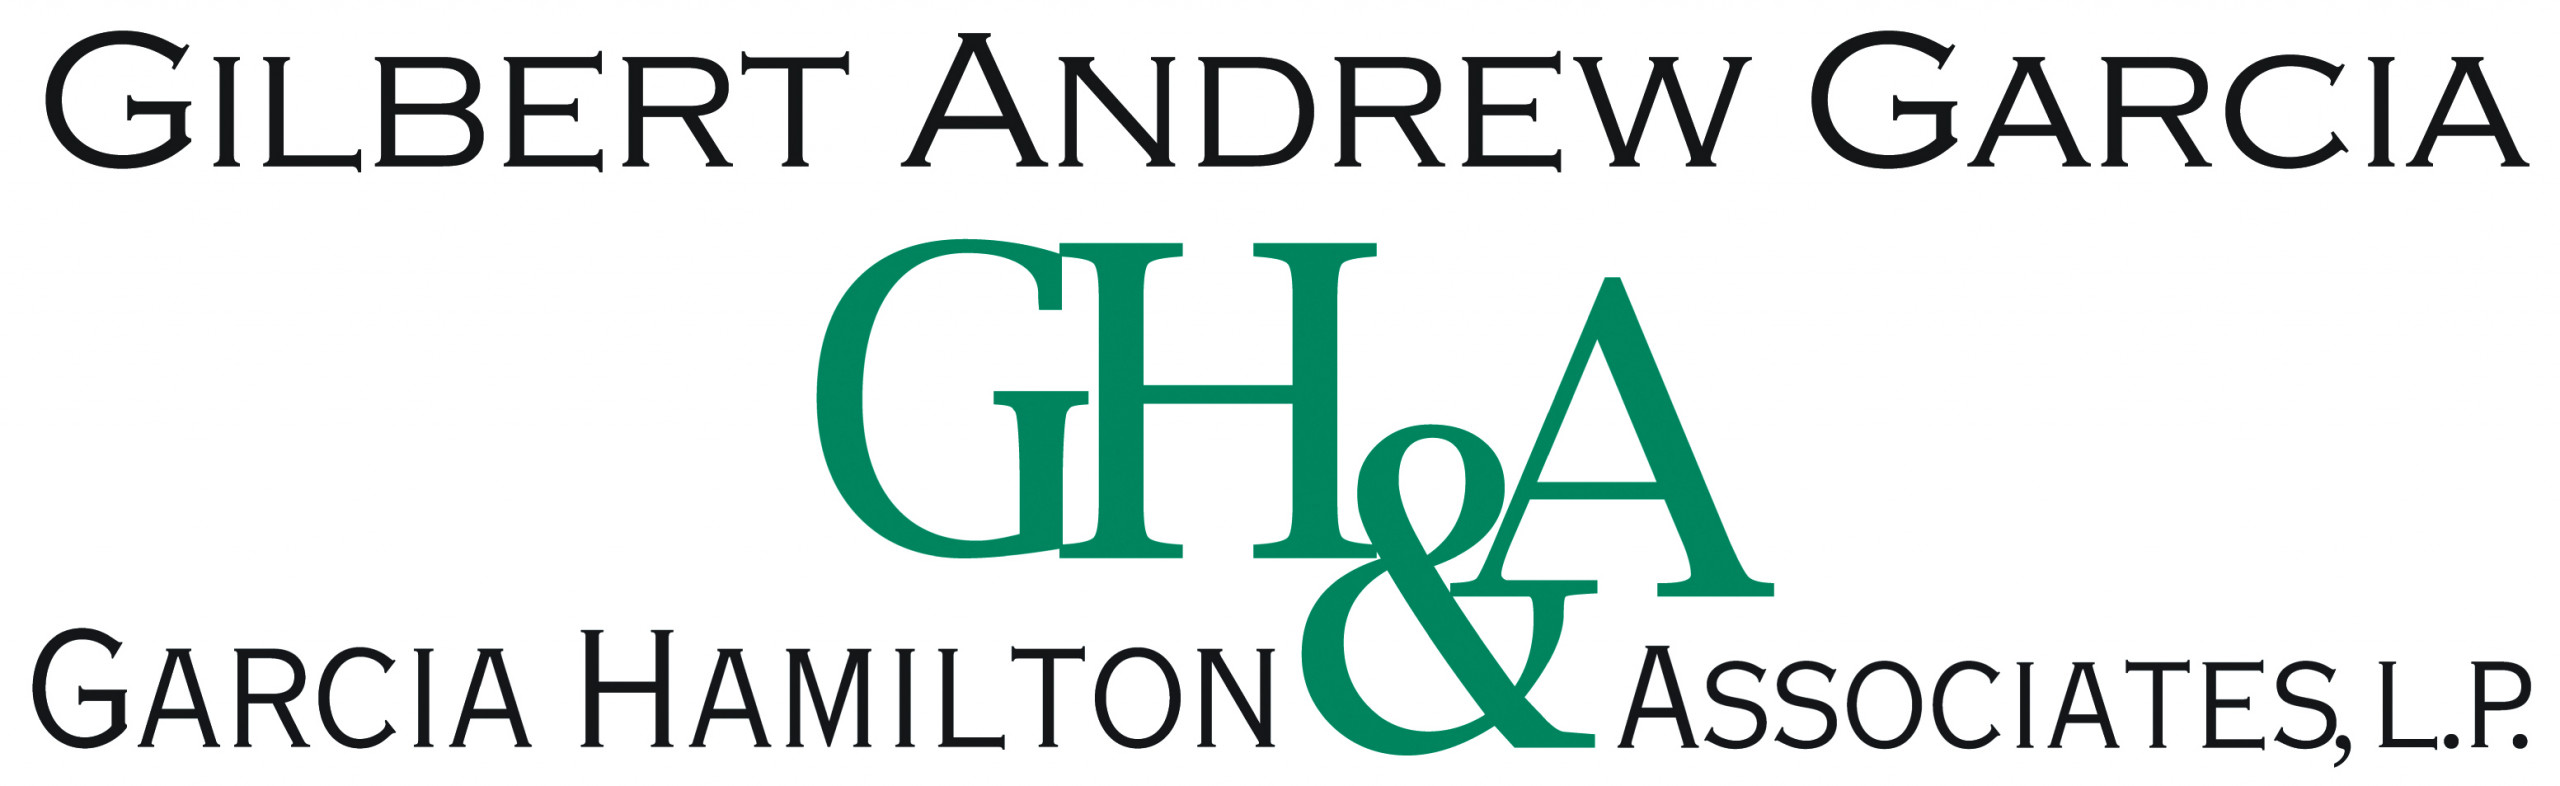 Gilbert Andrew Garcia GH&A logo